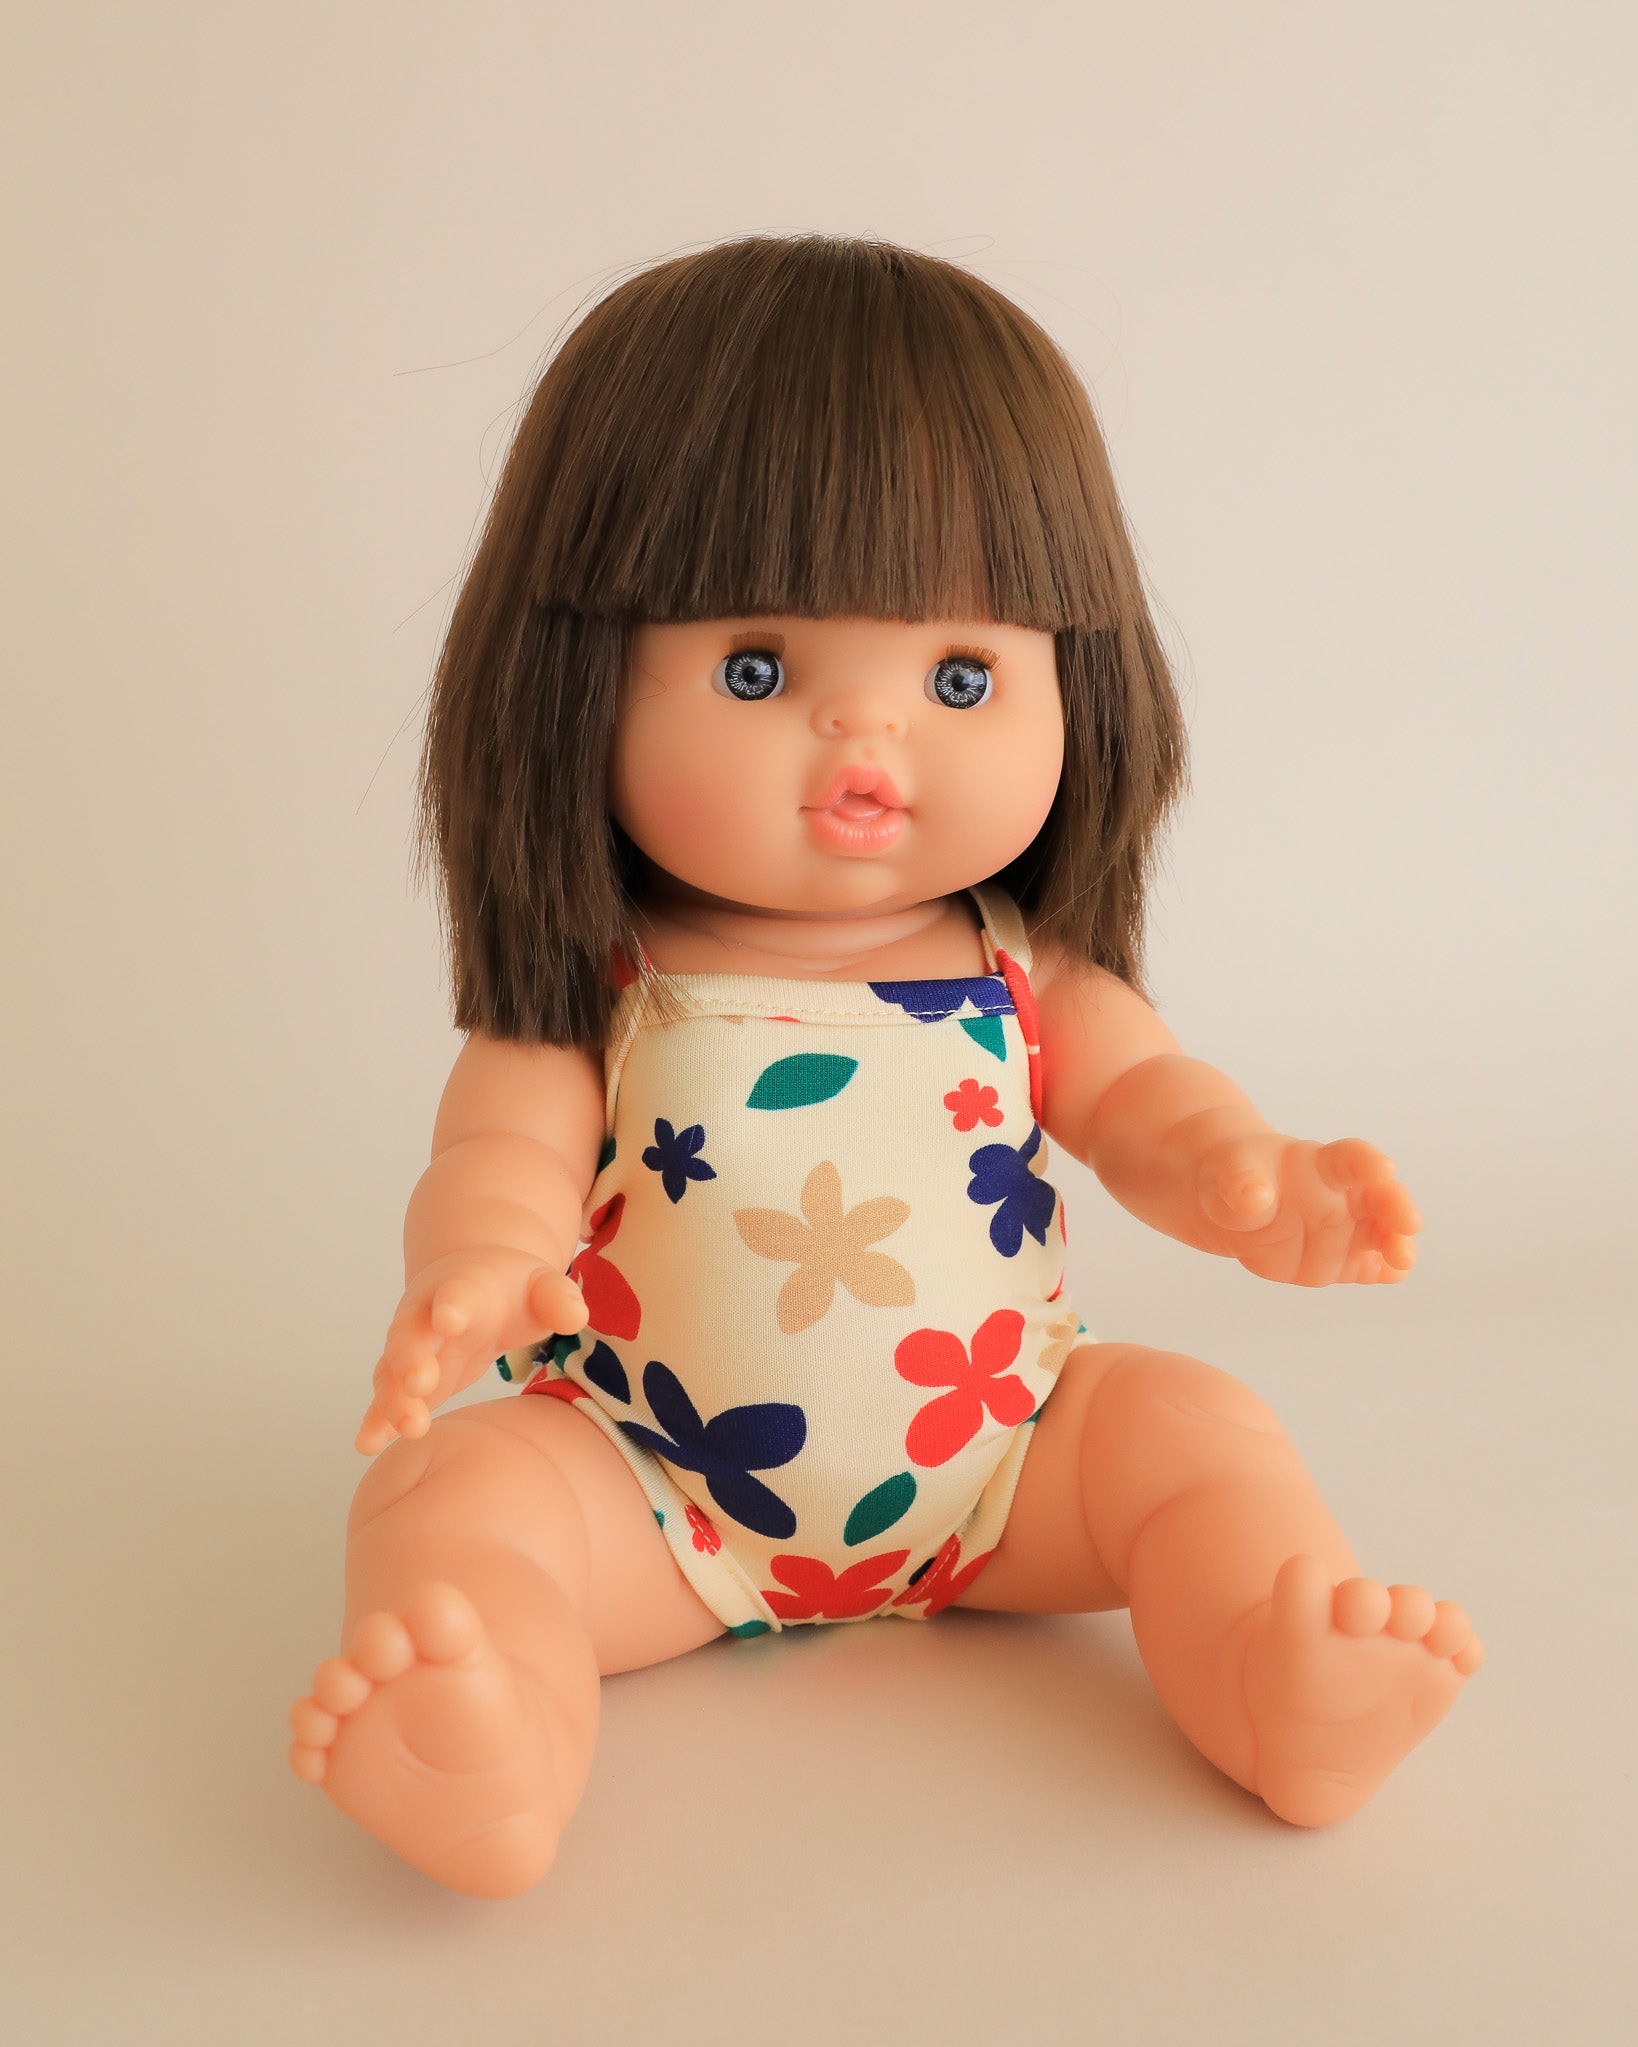 Minikane Doll Clothes | Doll Swimsuit - Mona